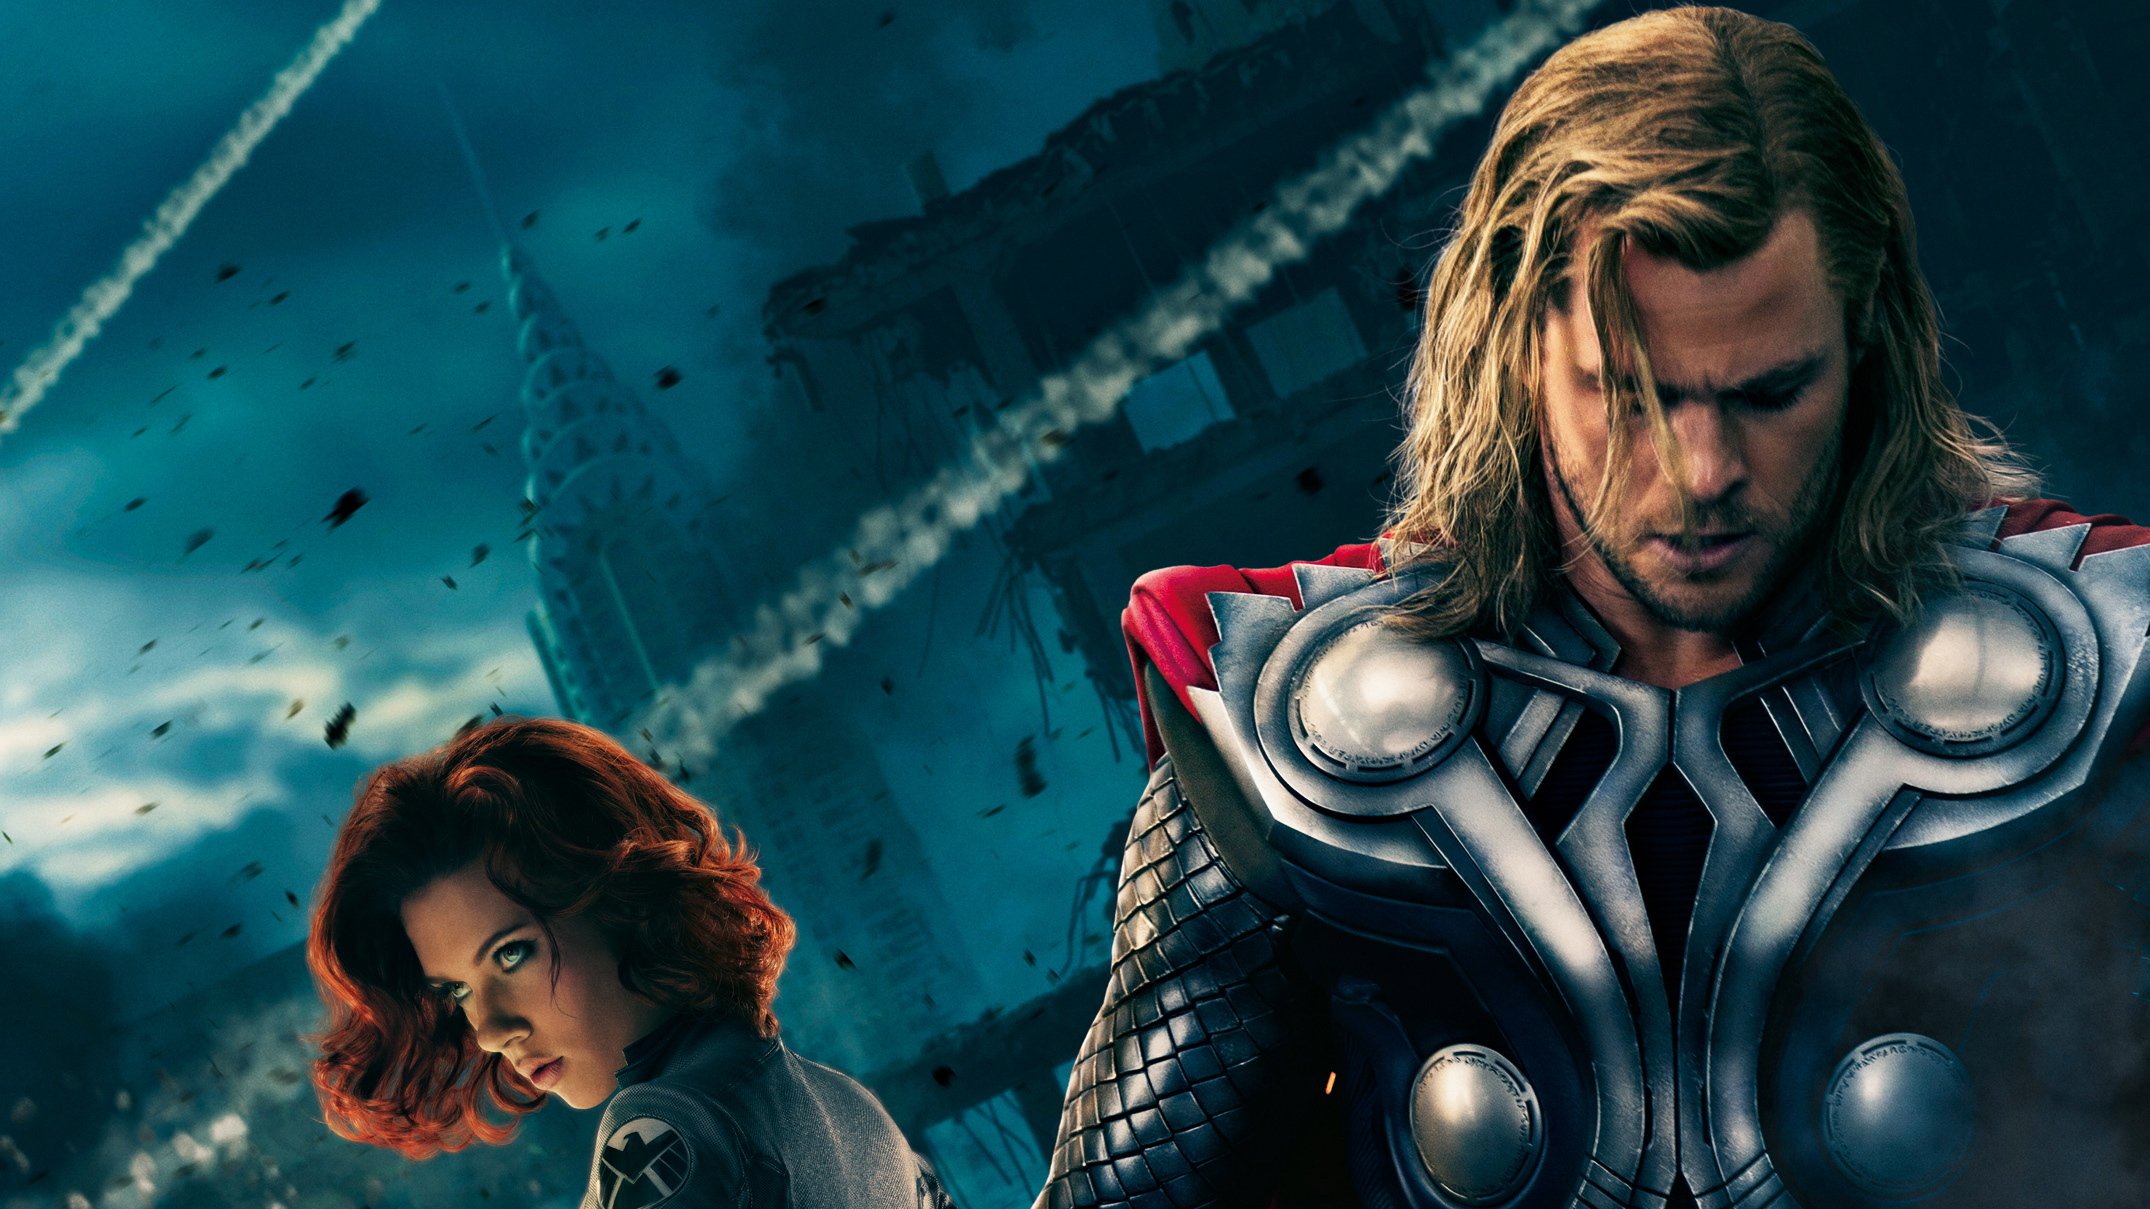 Avengers 2 full movie download utorrent download free torrent music files